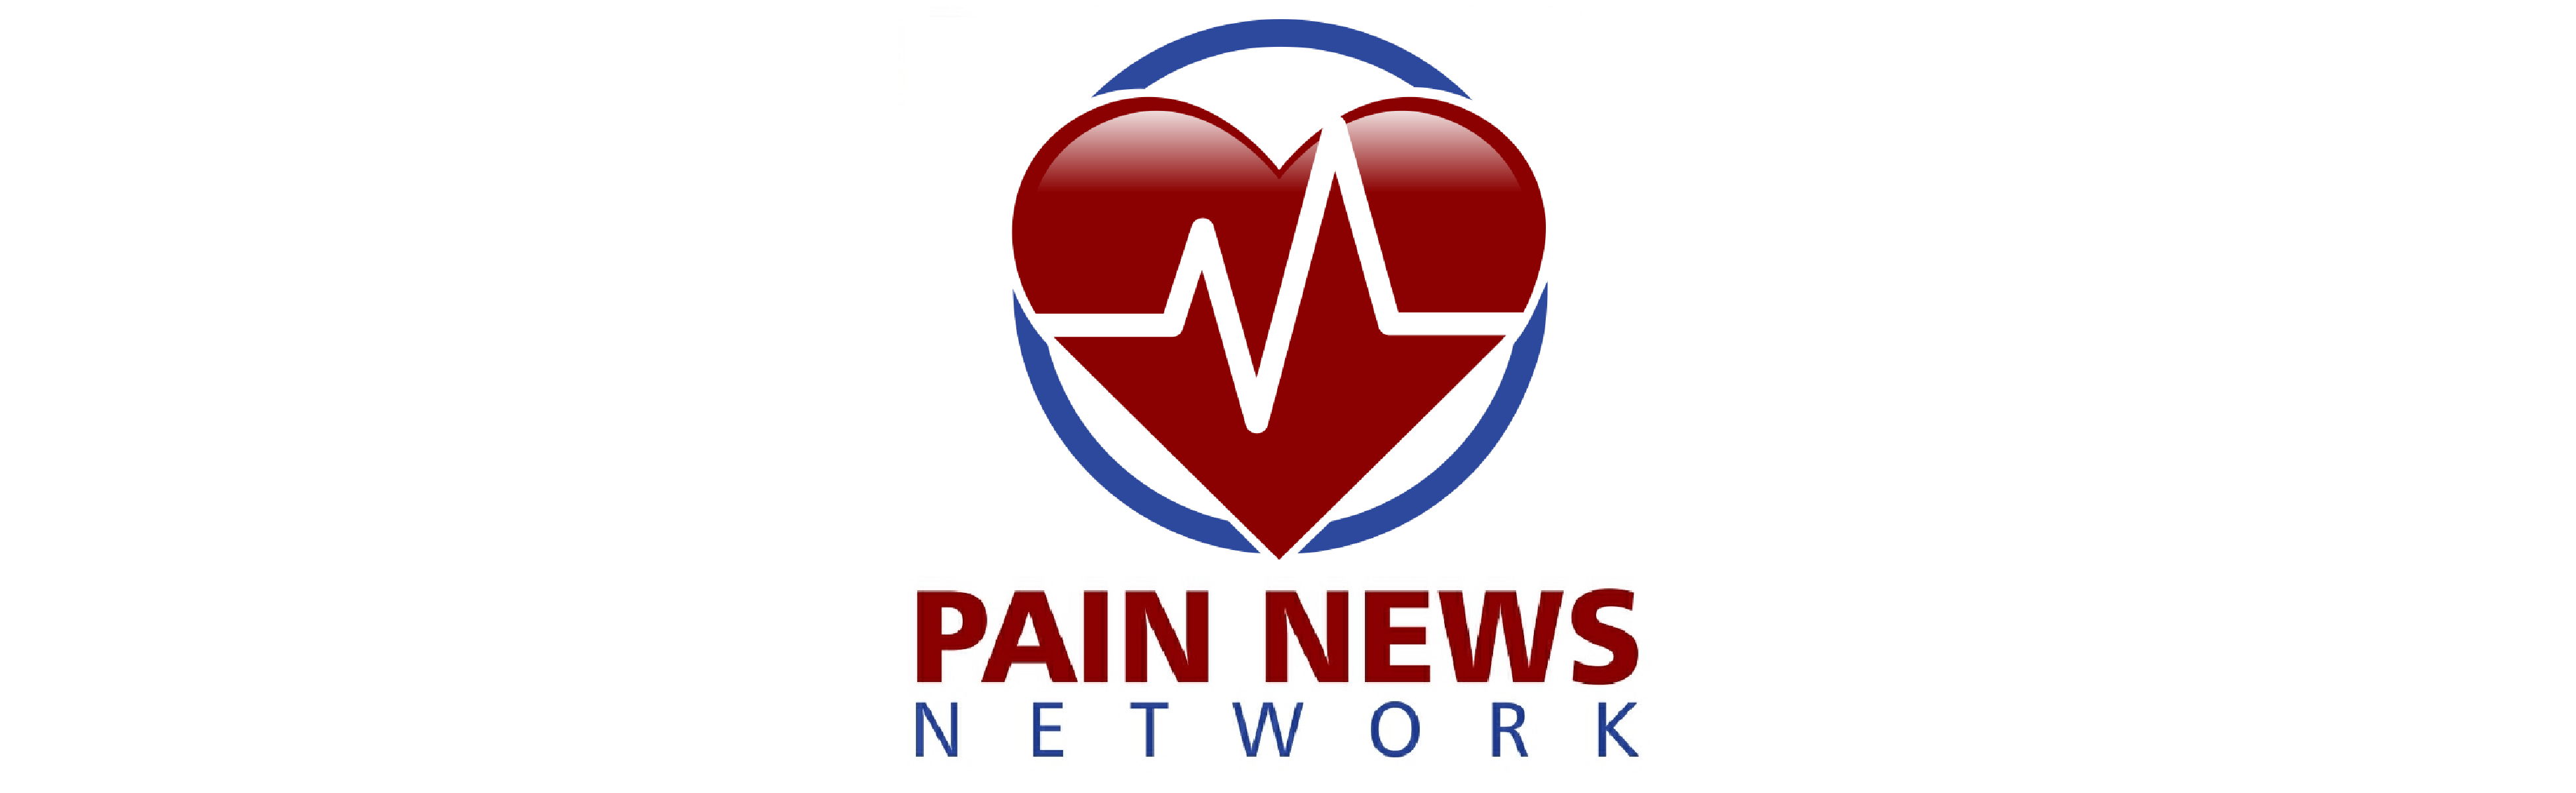 pain news logo